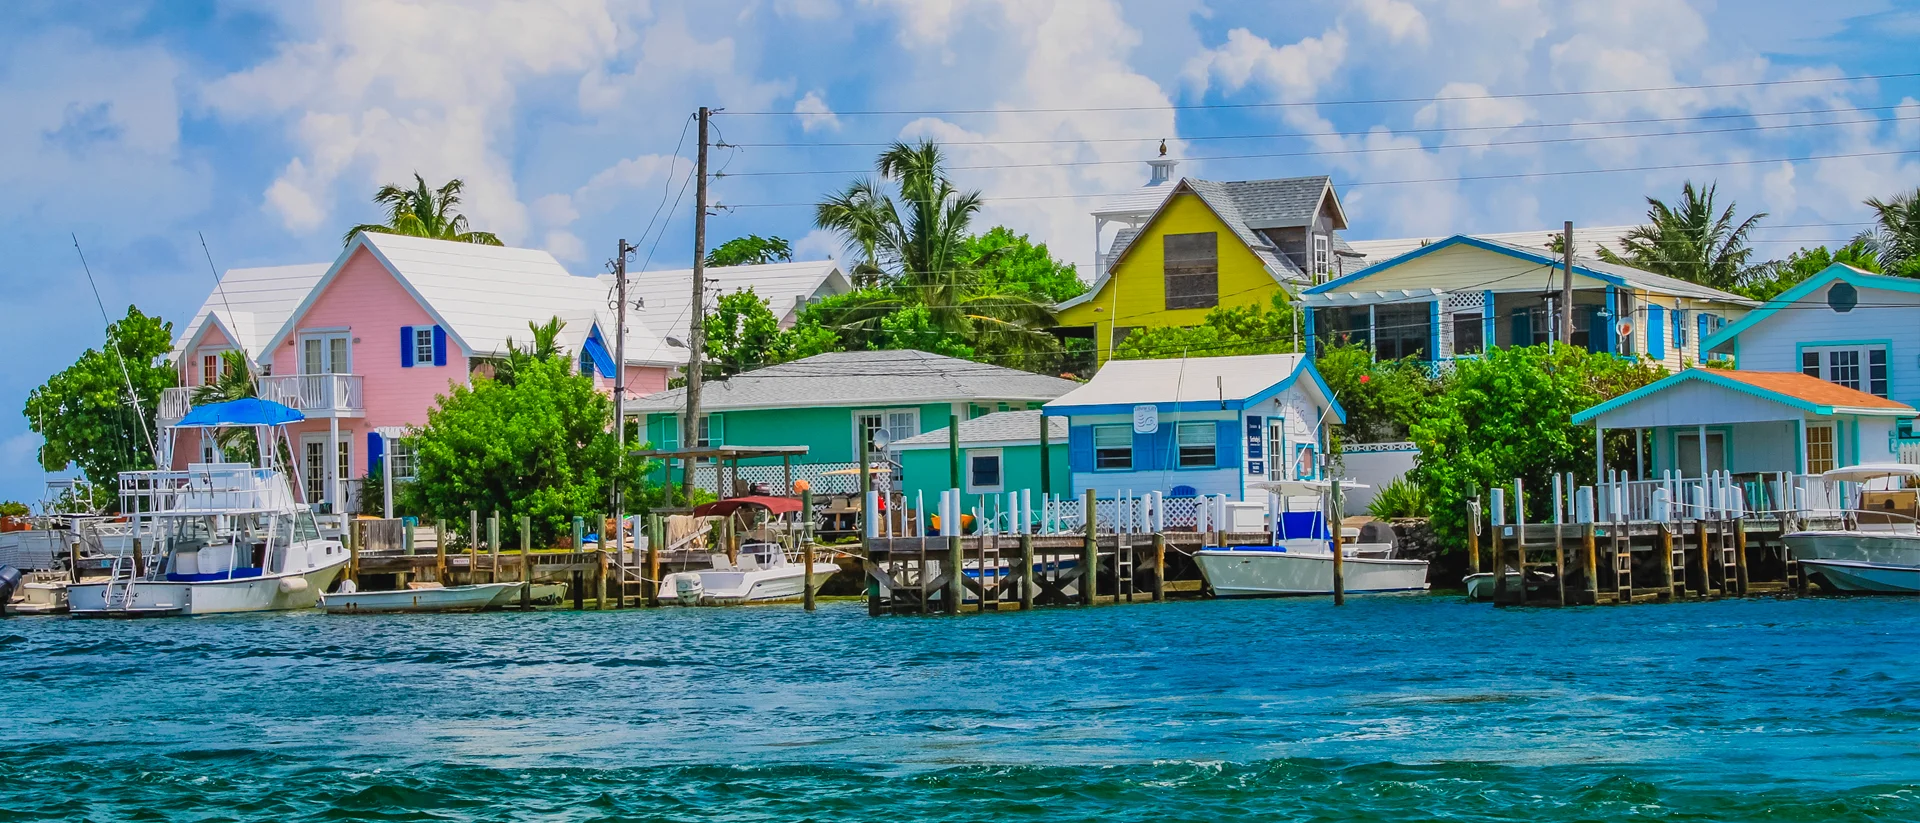 Bahamas port pier village and yacht